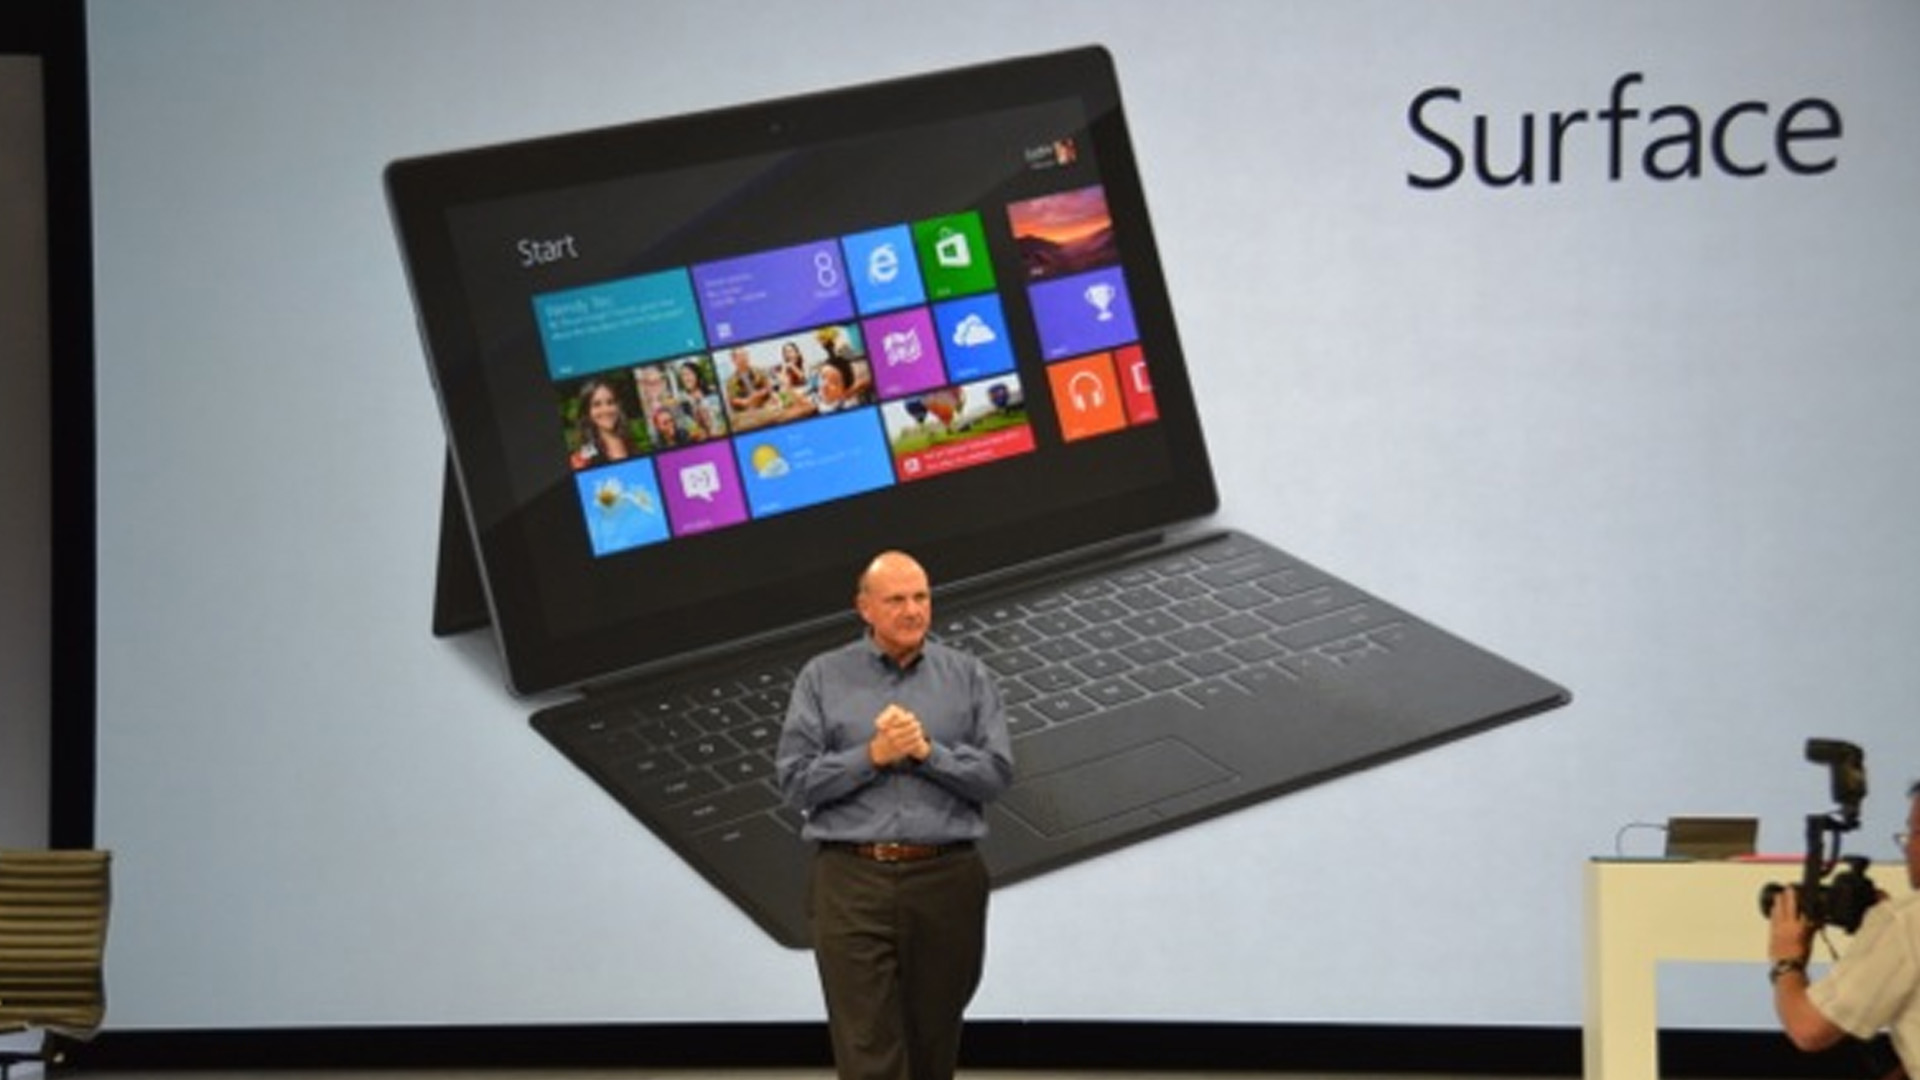 Microsoft Announces Microsoft Surface Tablet